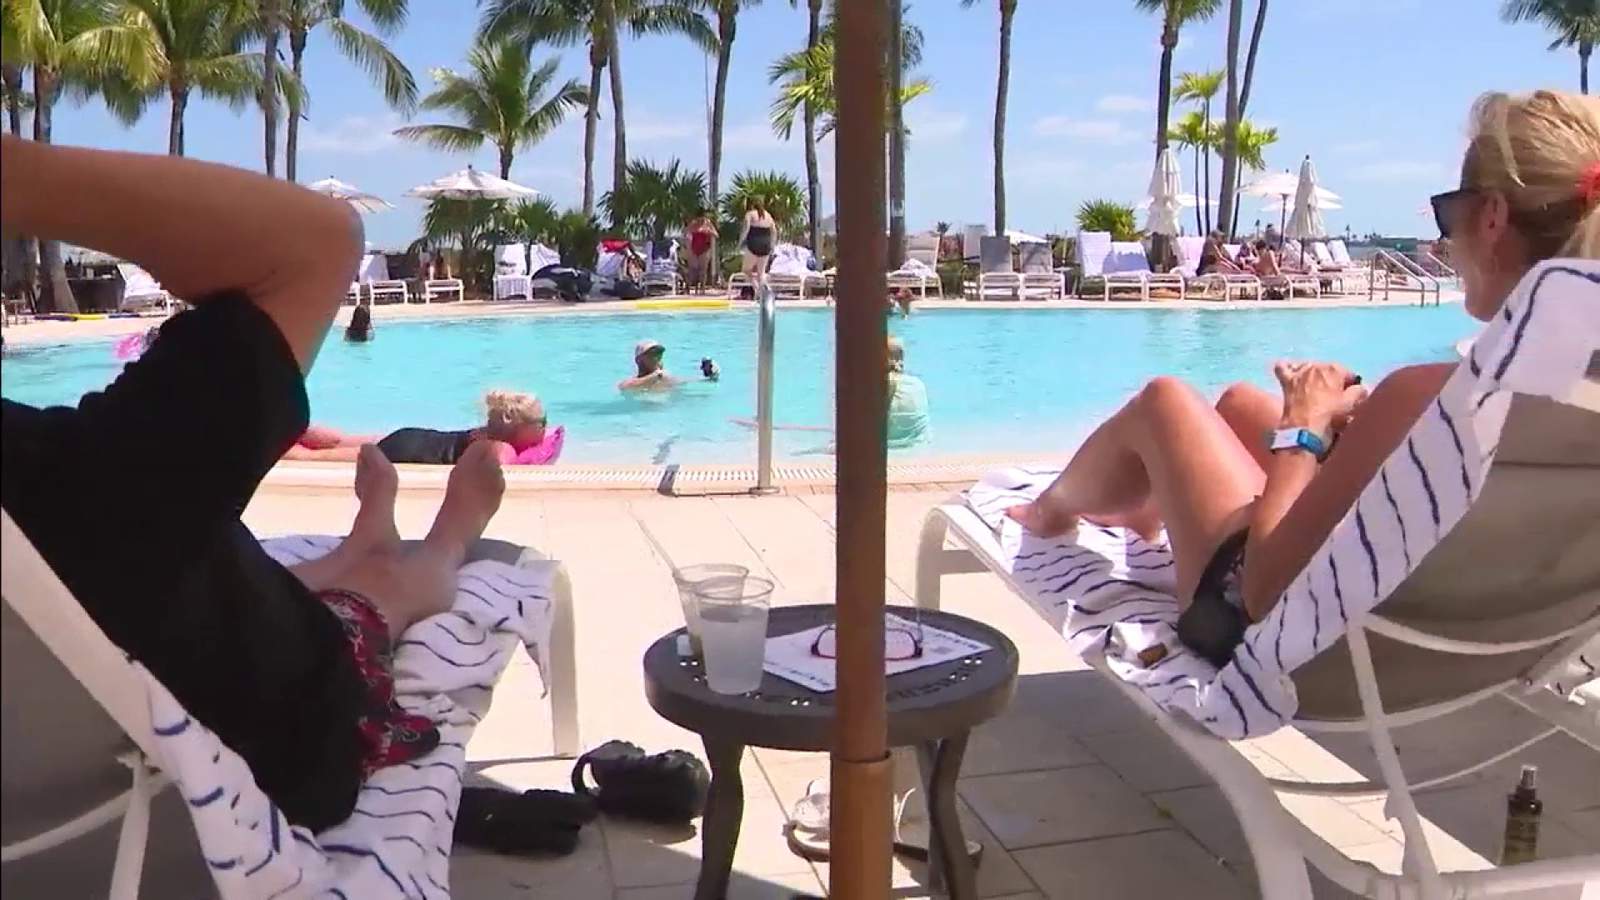 Tourism flourishes in Florida Keys despite shortage of workers